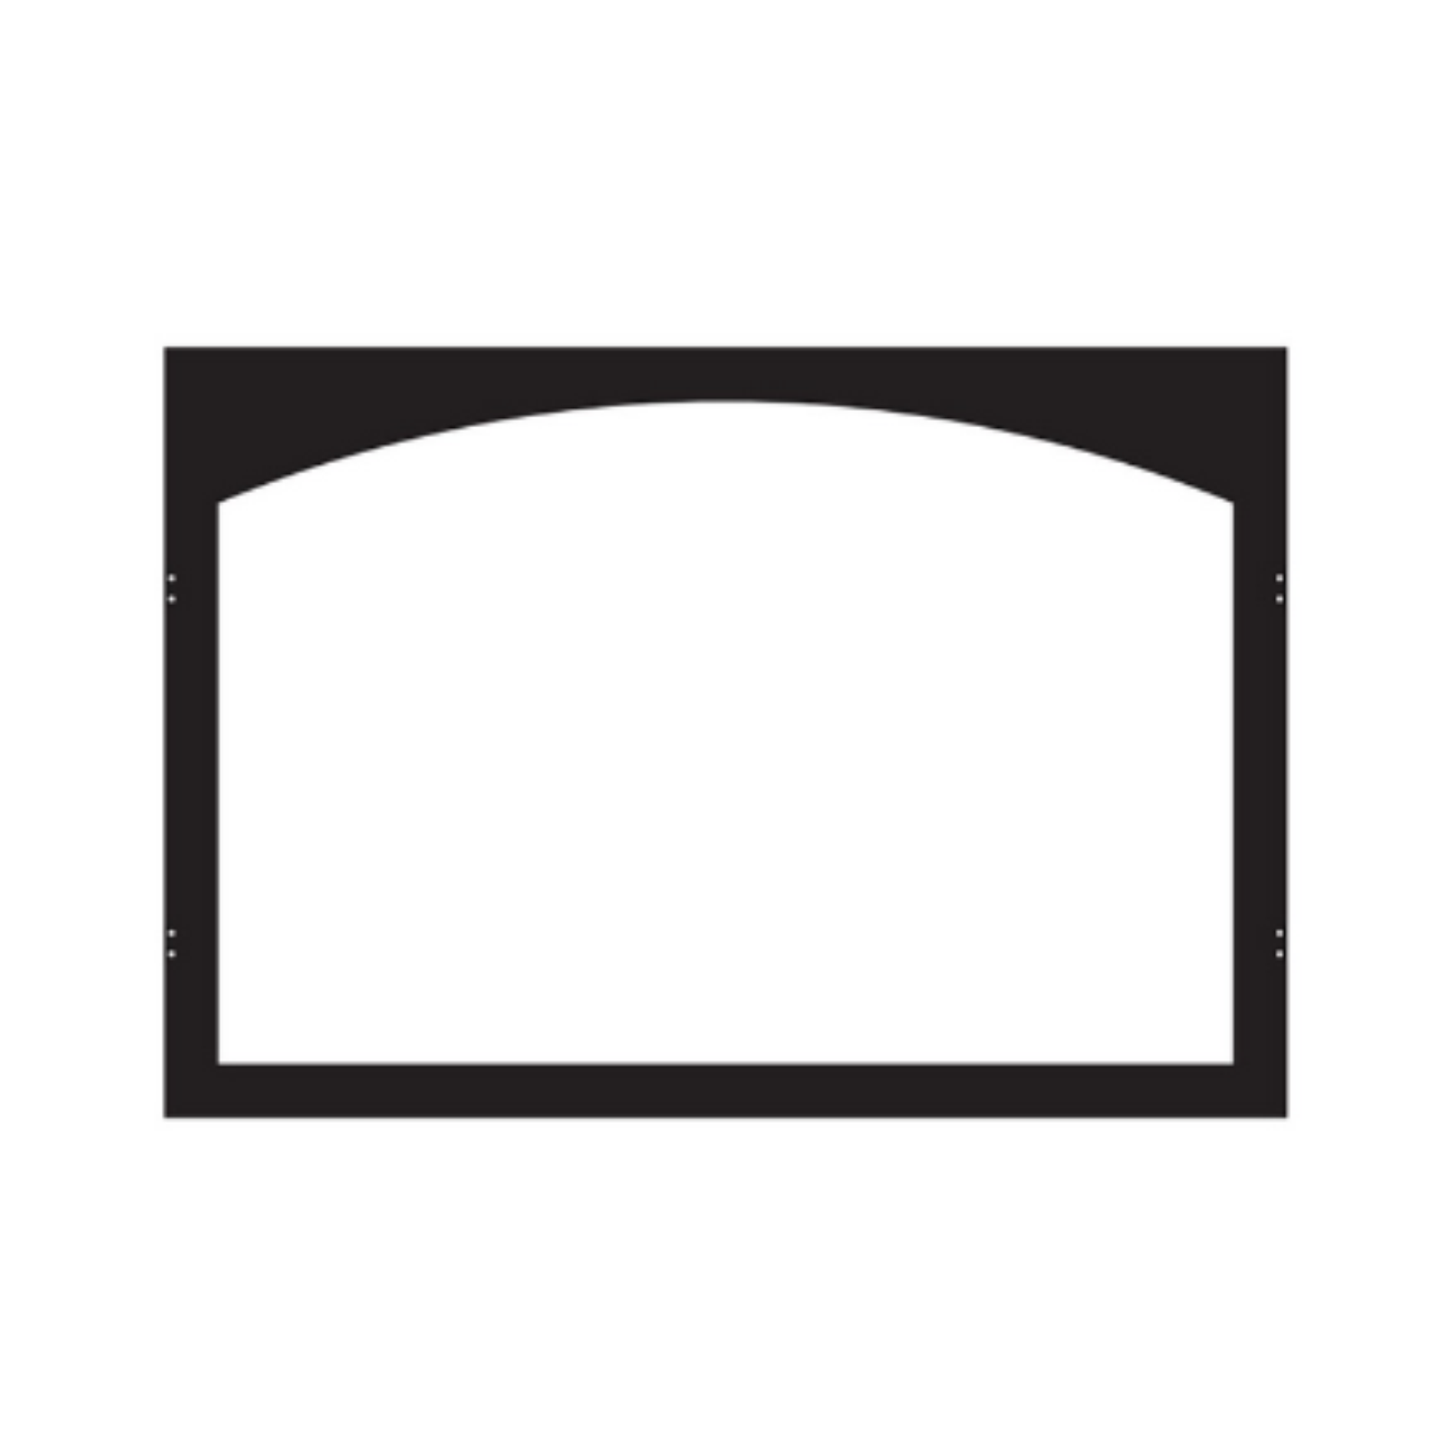 Empire Black Arch Door Frame for Breckenridge Premium 36 - VBY36TBL